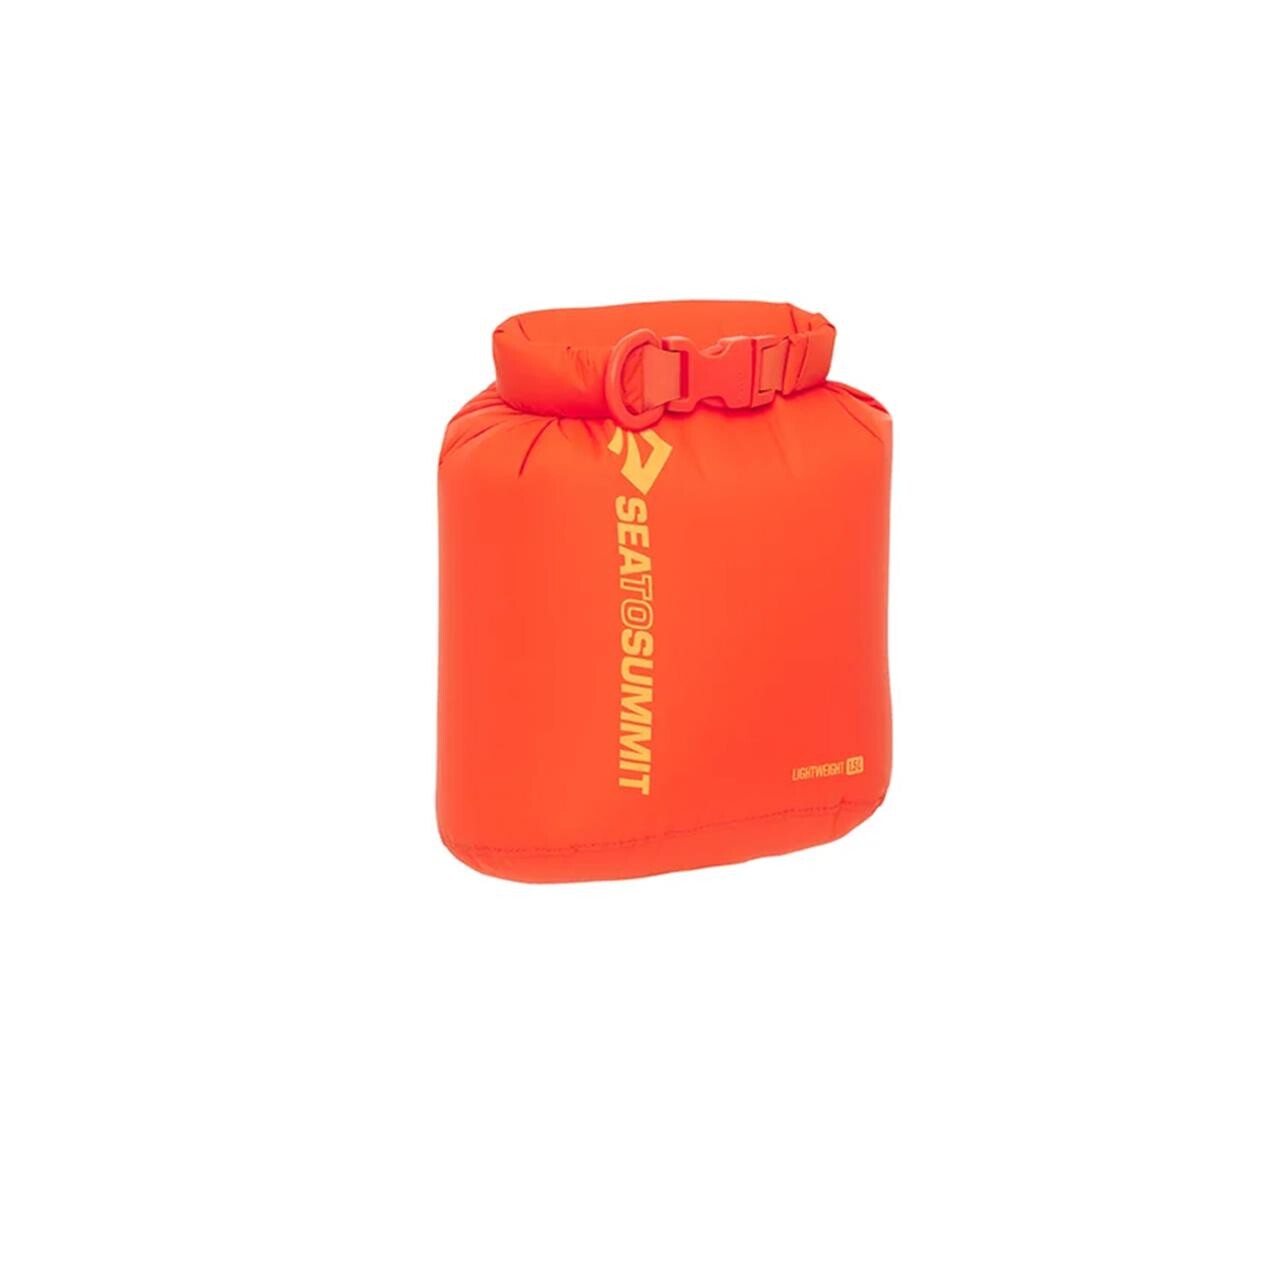 Billede af Sea to Summit Lightweight Dry Bag 1.5l (Orange (SPICY ORANGE))